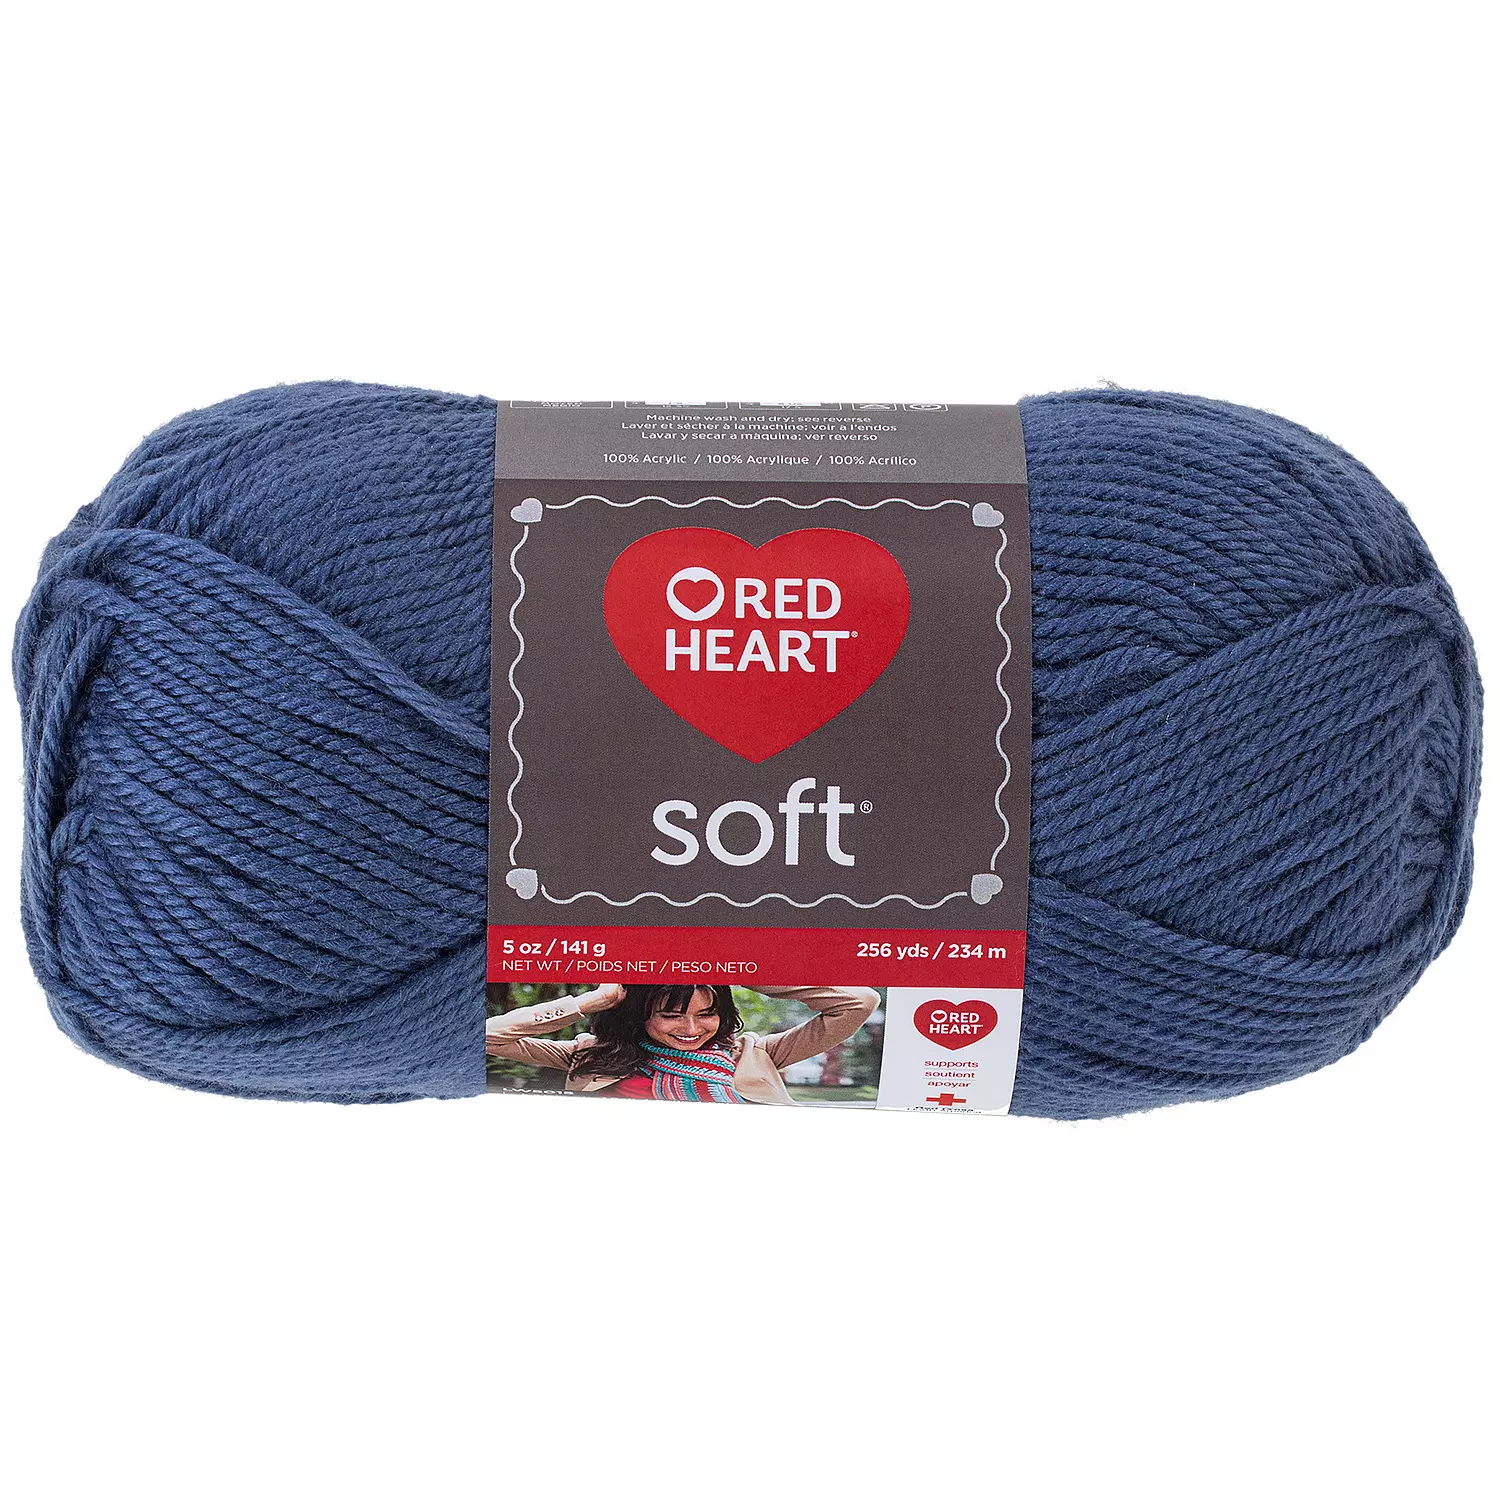 Red Heart Soft - Yarn, mid blue